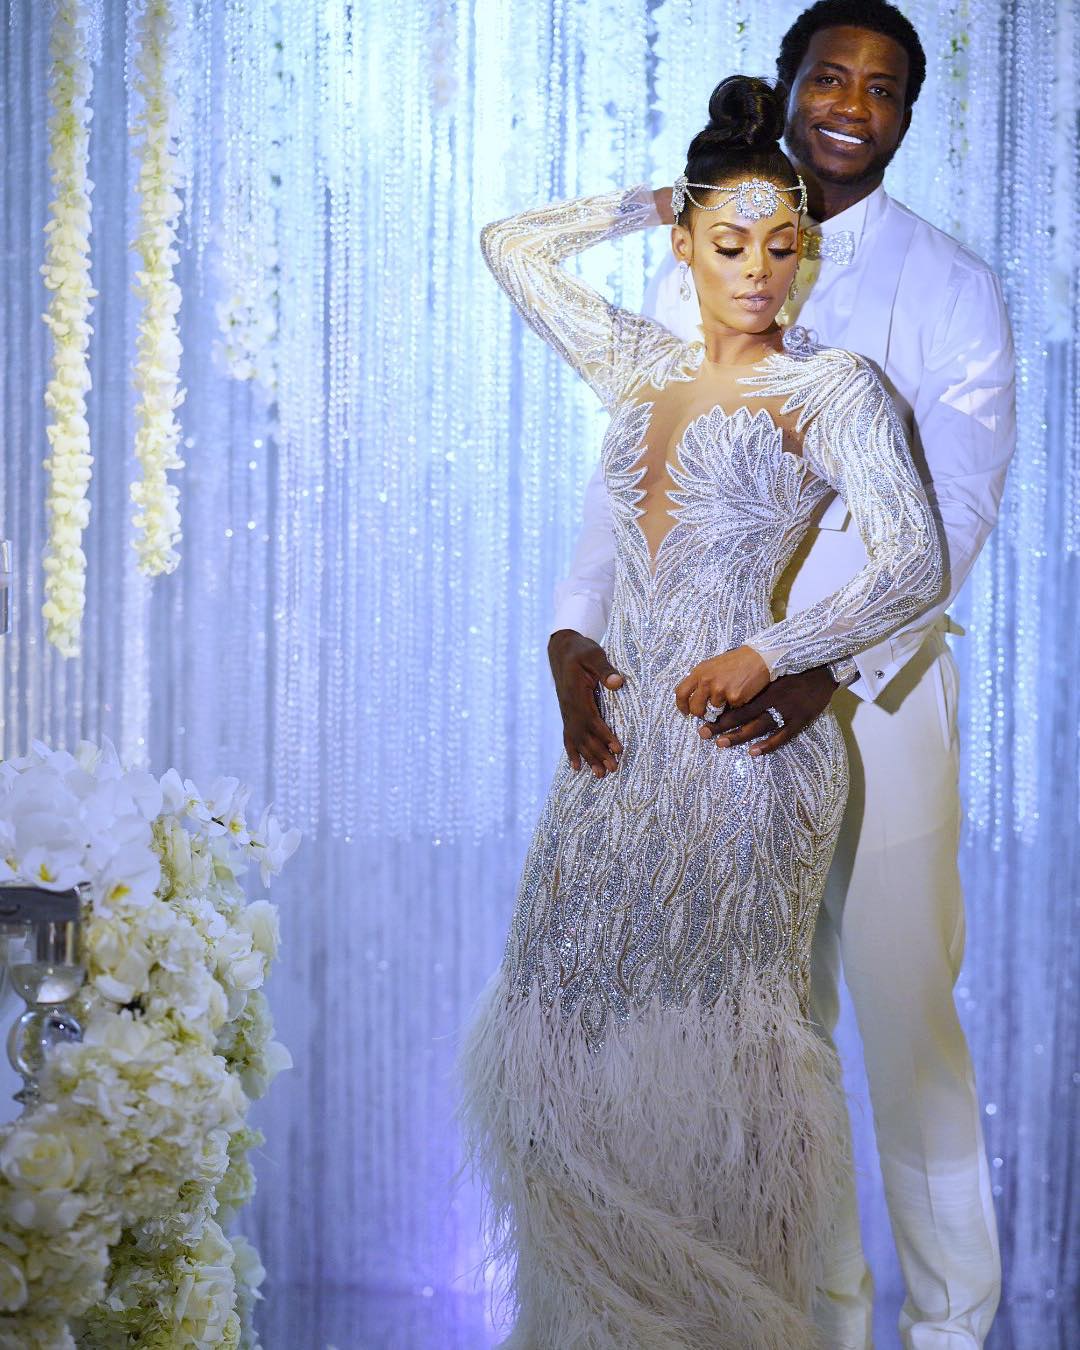 Gucci Mane and Keyshia Kaoir's Super Lavish Wedding #TheManeEvent